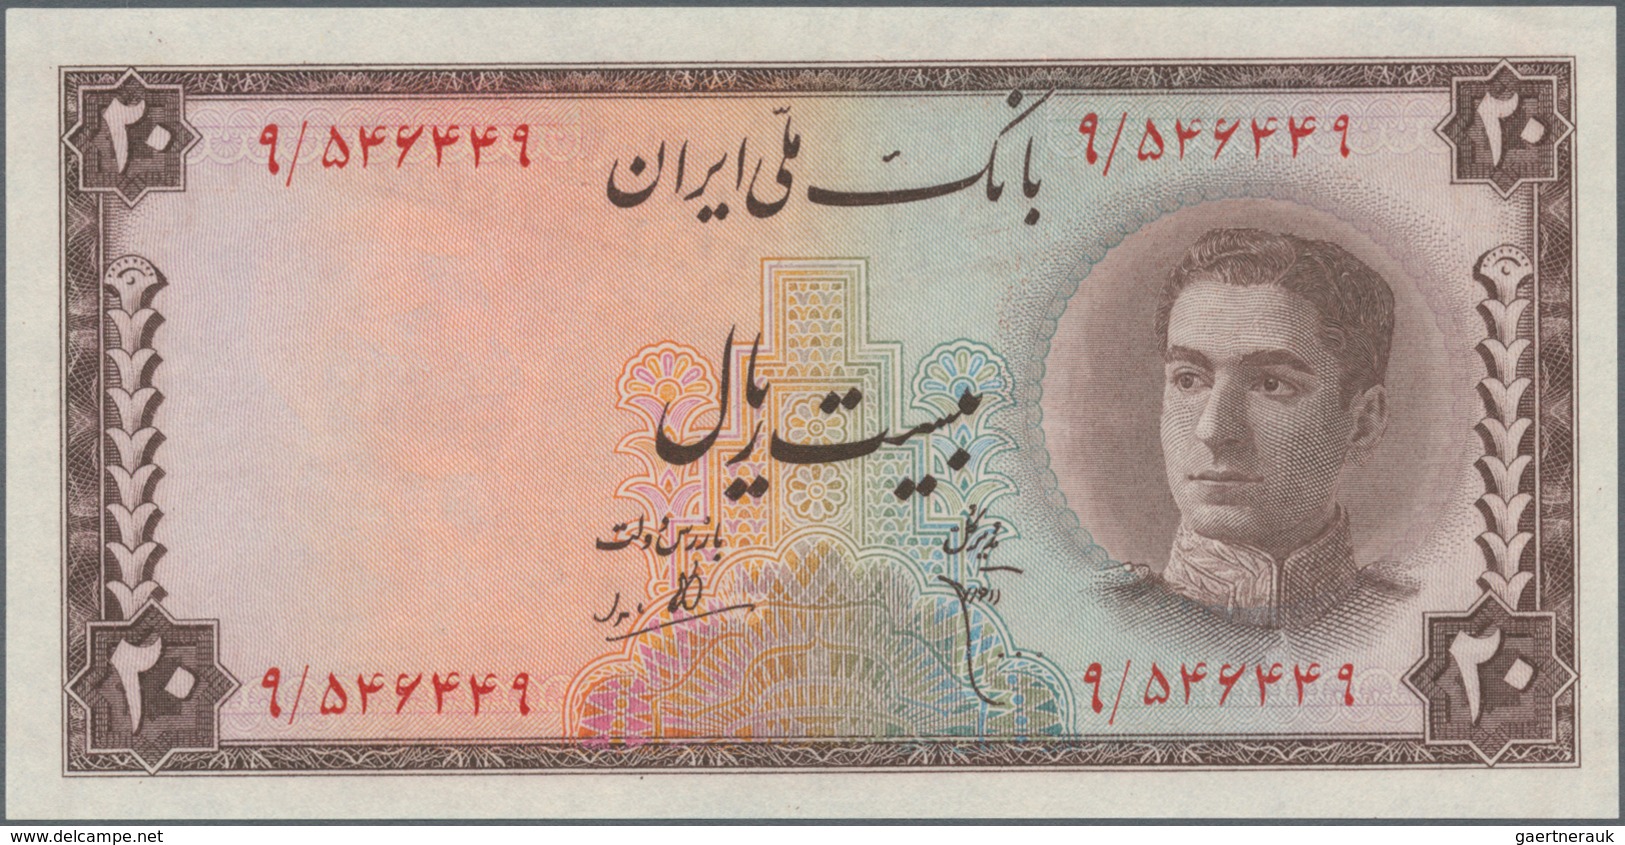 Iran: Set Of 2 Consecutive Notes 20 Rials ND(1948) P. 48, In Condition: UNC. (2 Pcs) - Iran